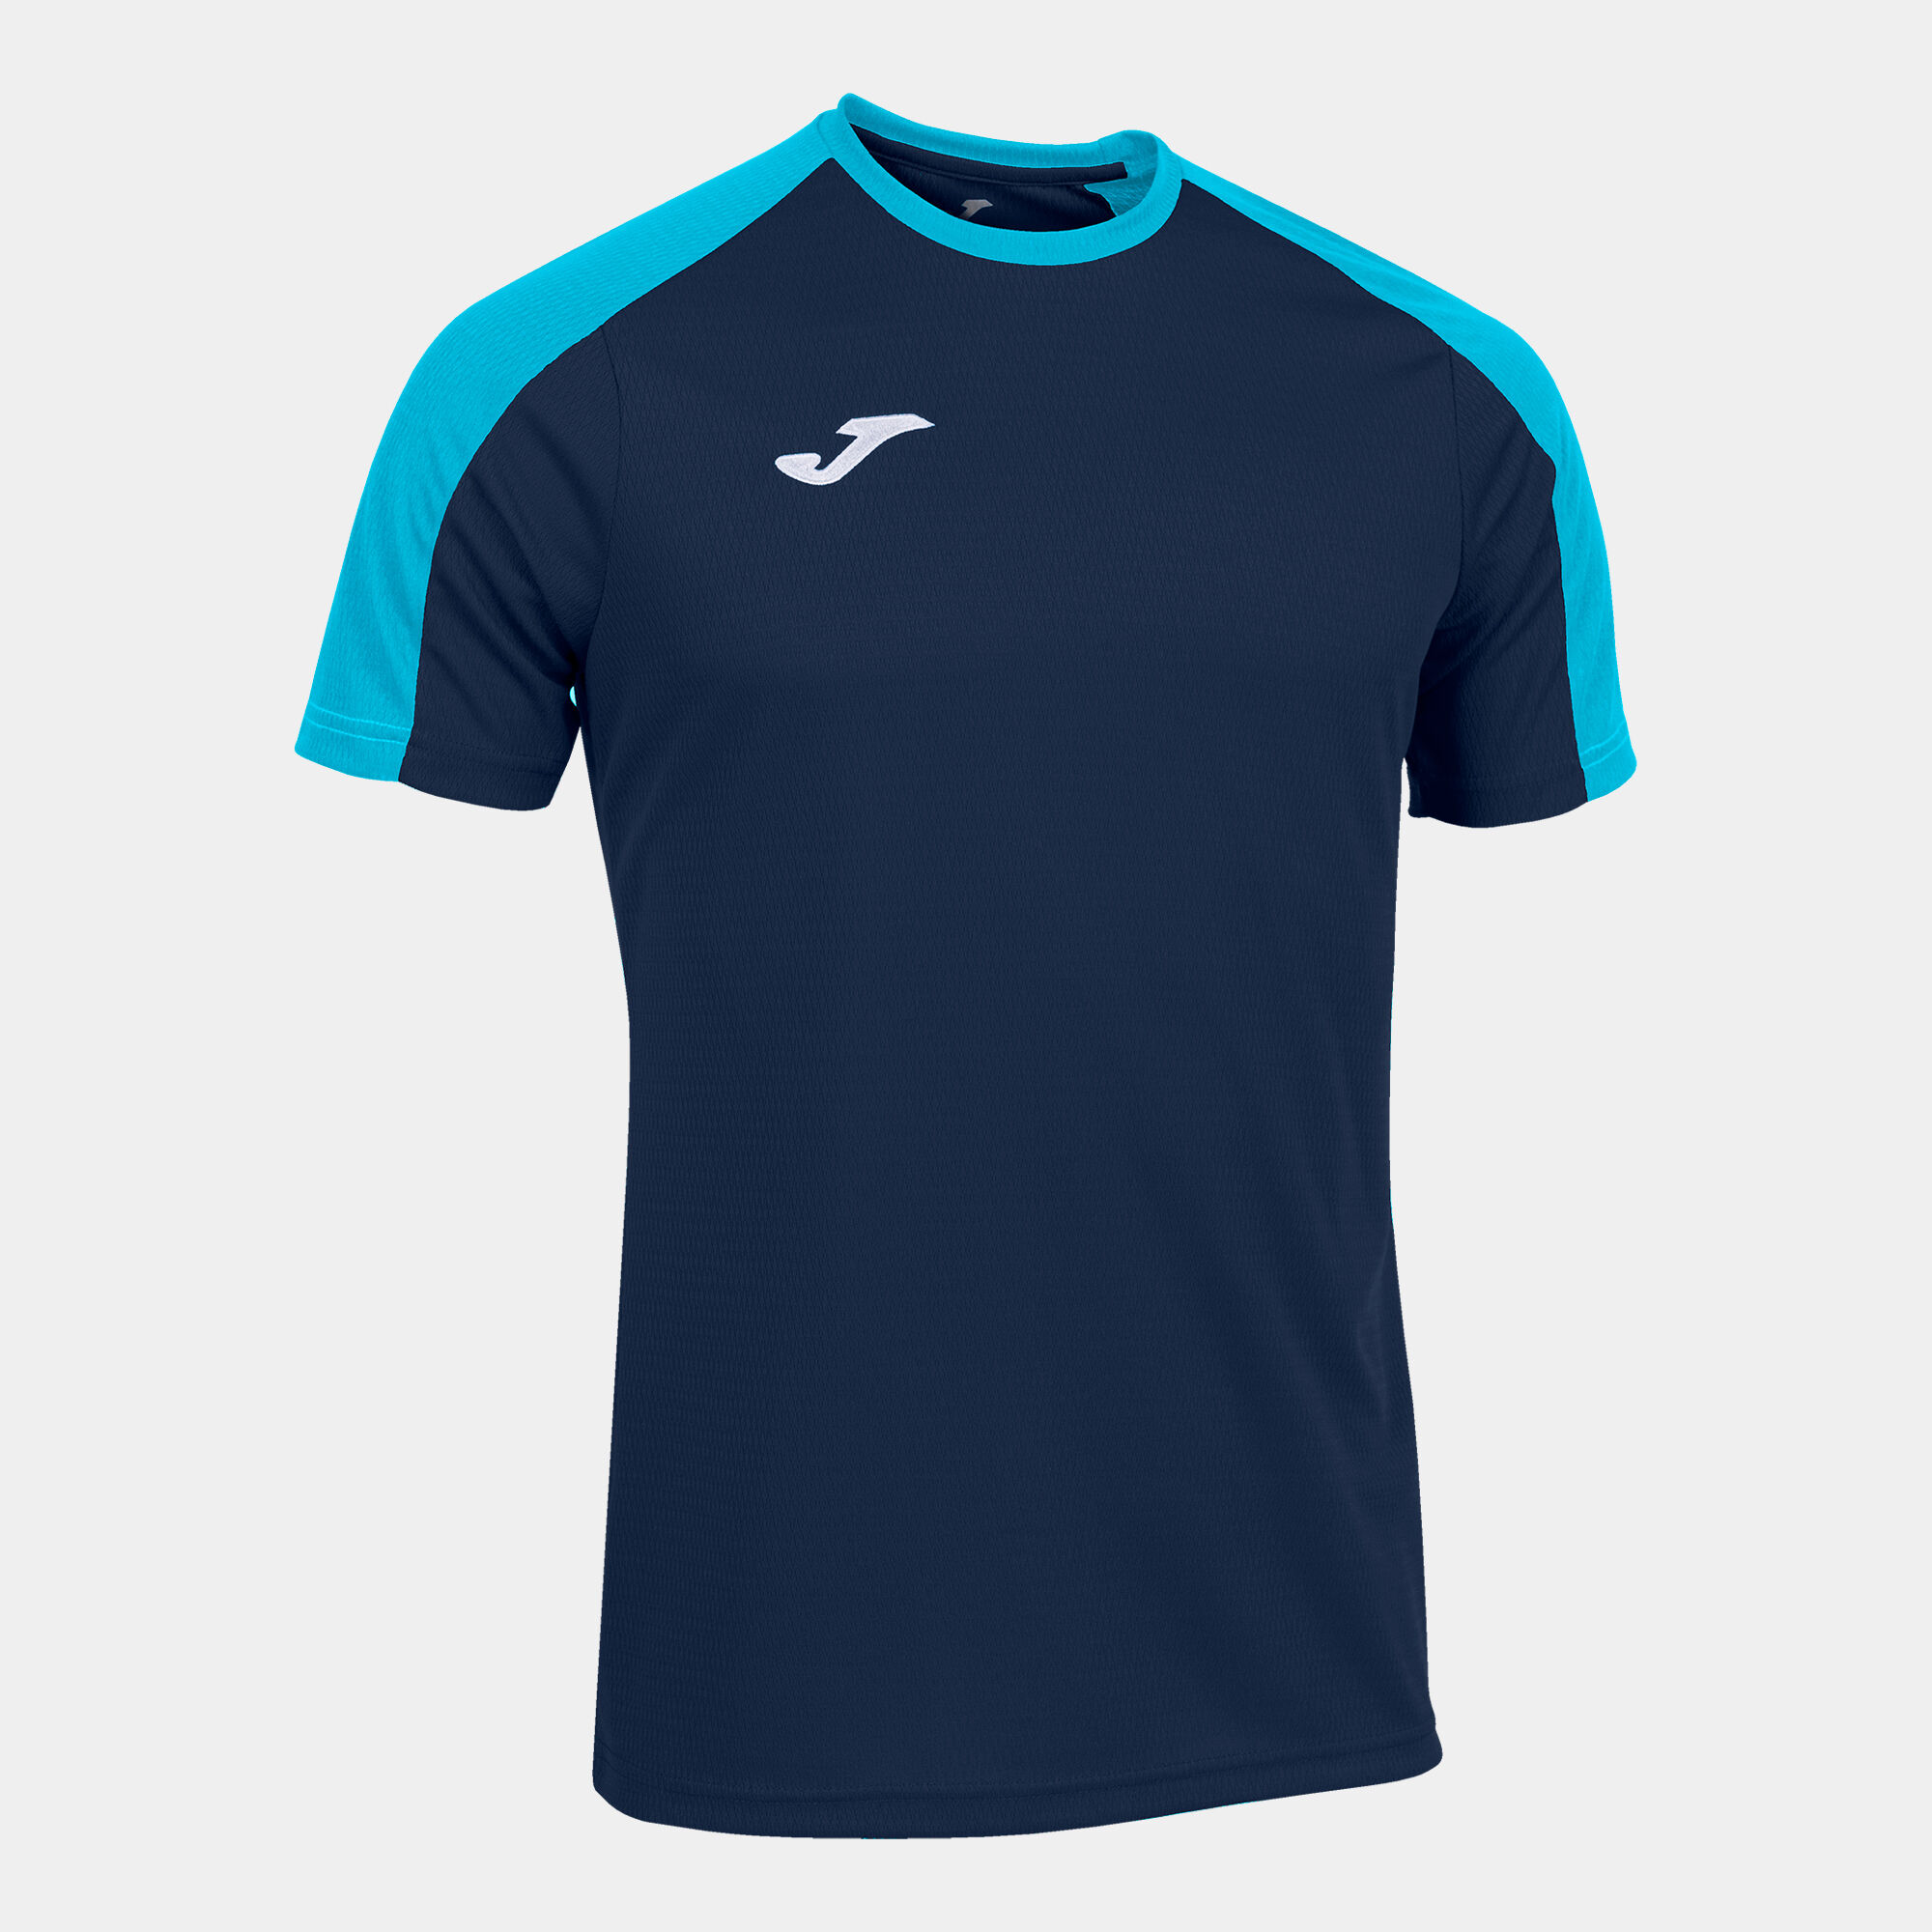 T-shirt manga curta homem Eco Championship azul marinho azul-turquesa fluorescente